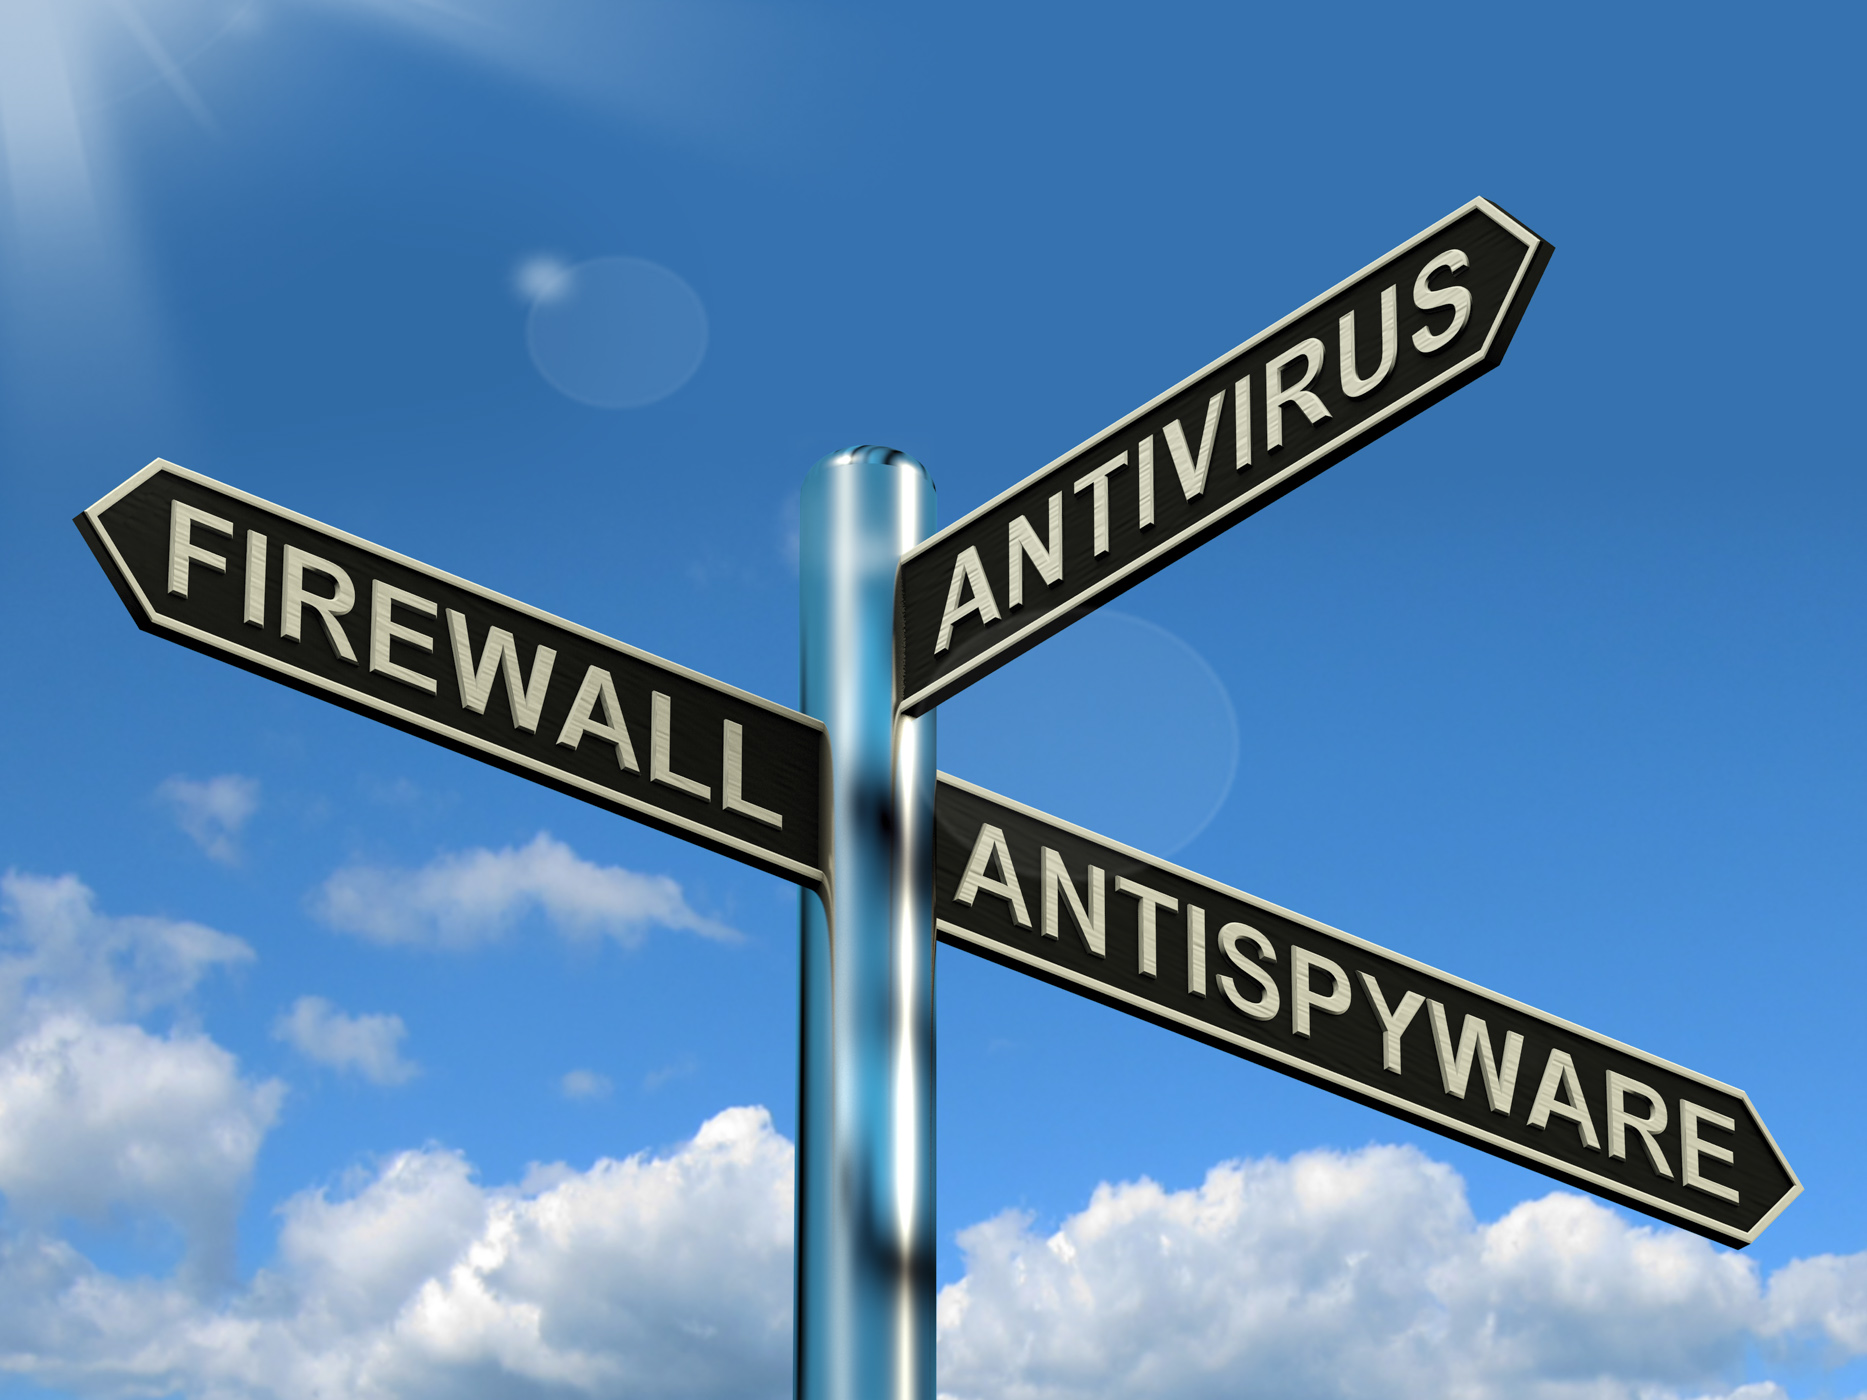 Firewall antivirus antispyware signpost showing internet and computer photo